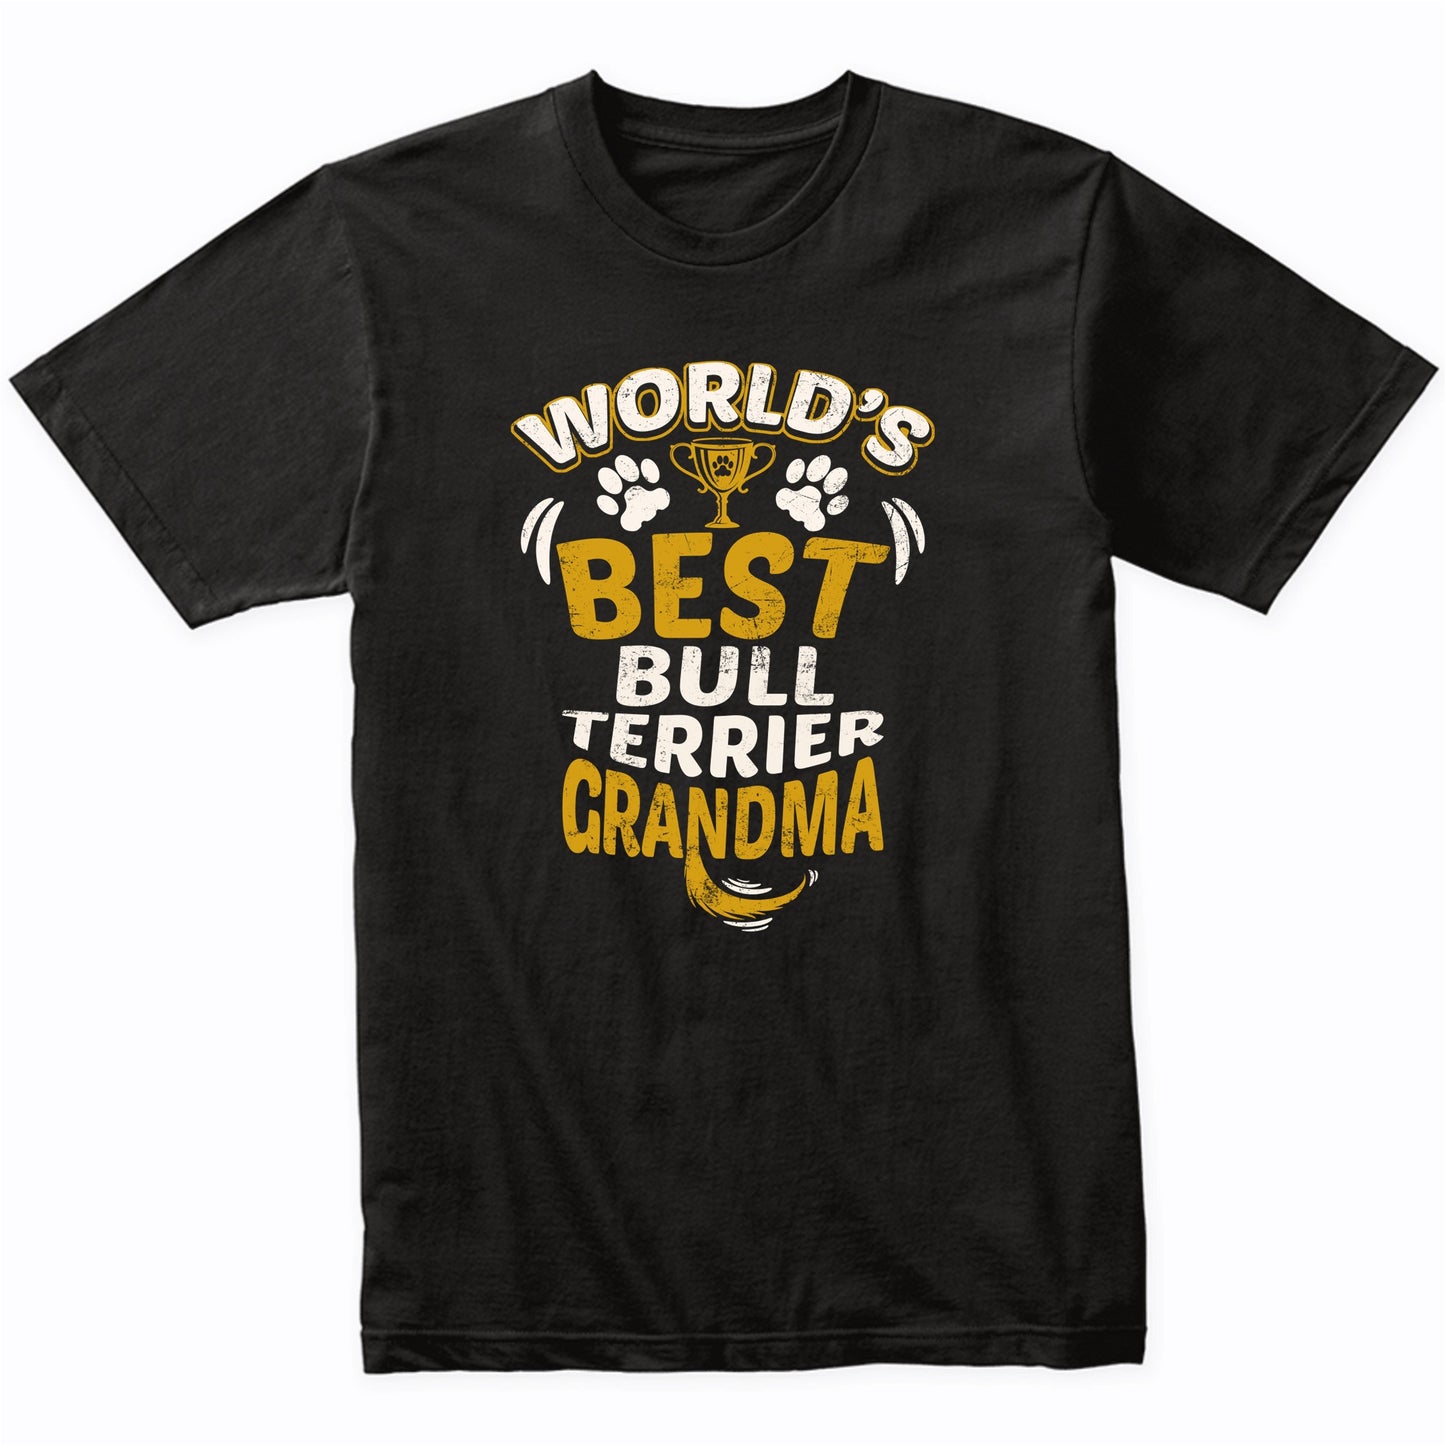 World's Best Bull Terrier Grandma Graphic T-Shirt